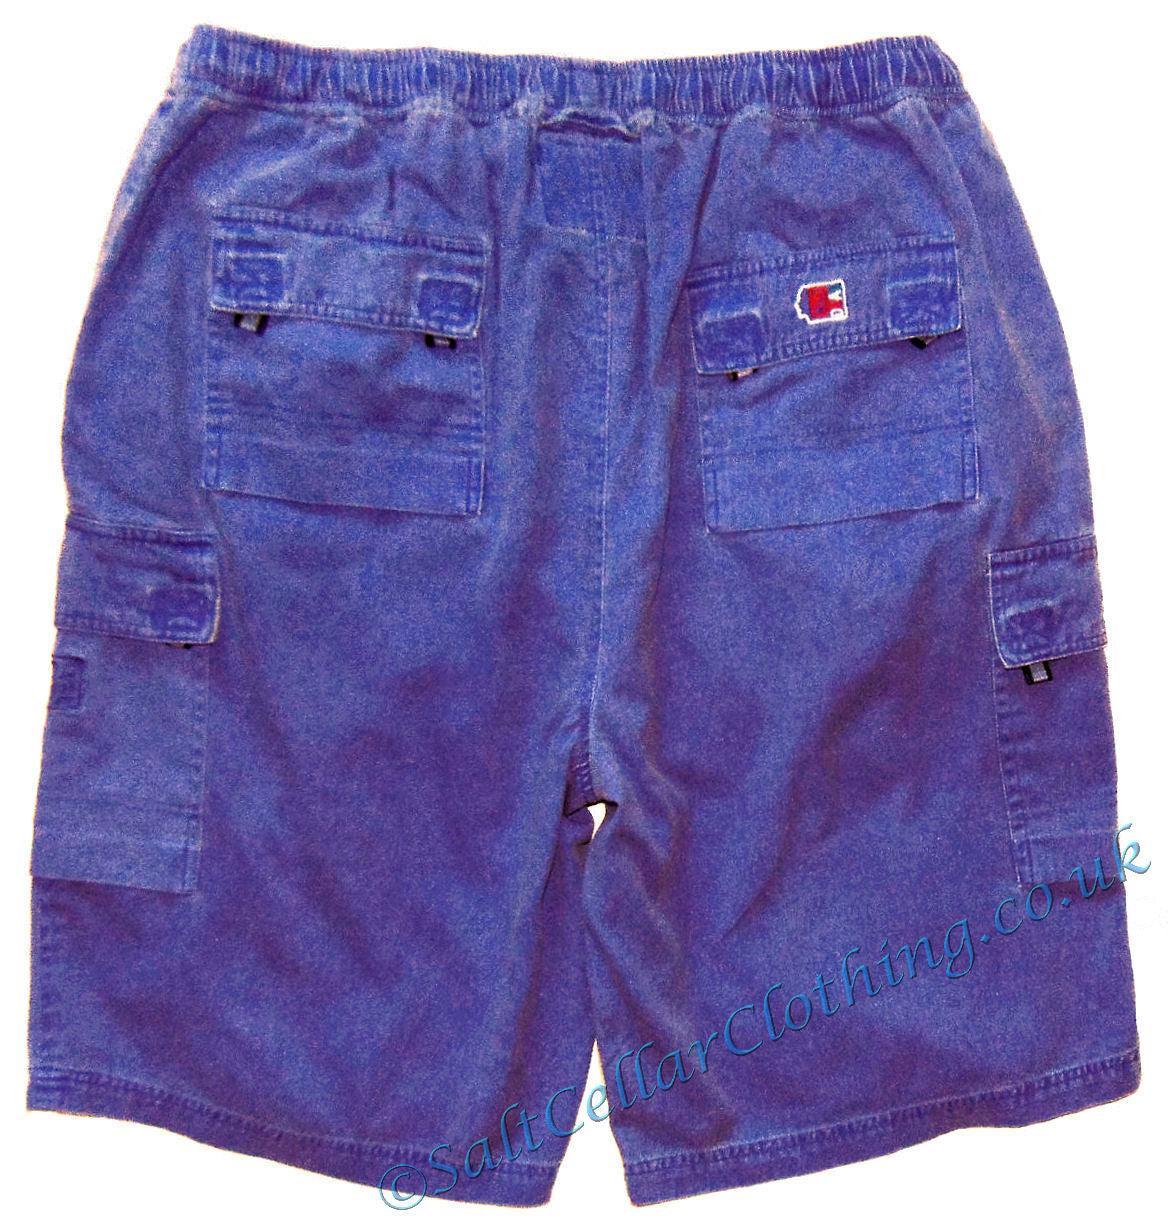 Deal Clothing Mens 'AS125 - BIG' Cargo Shorts - Denim Blue